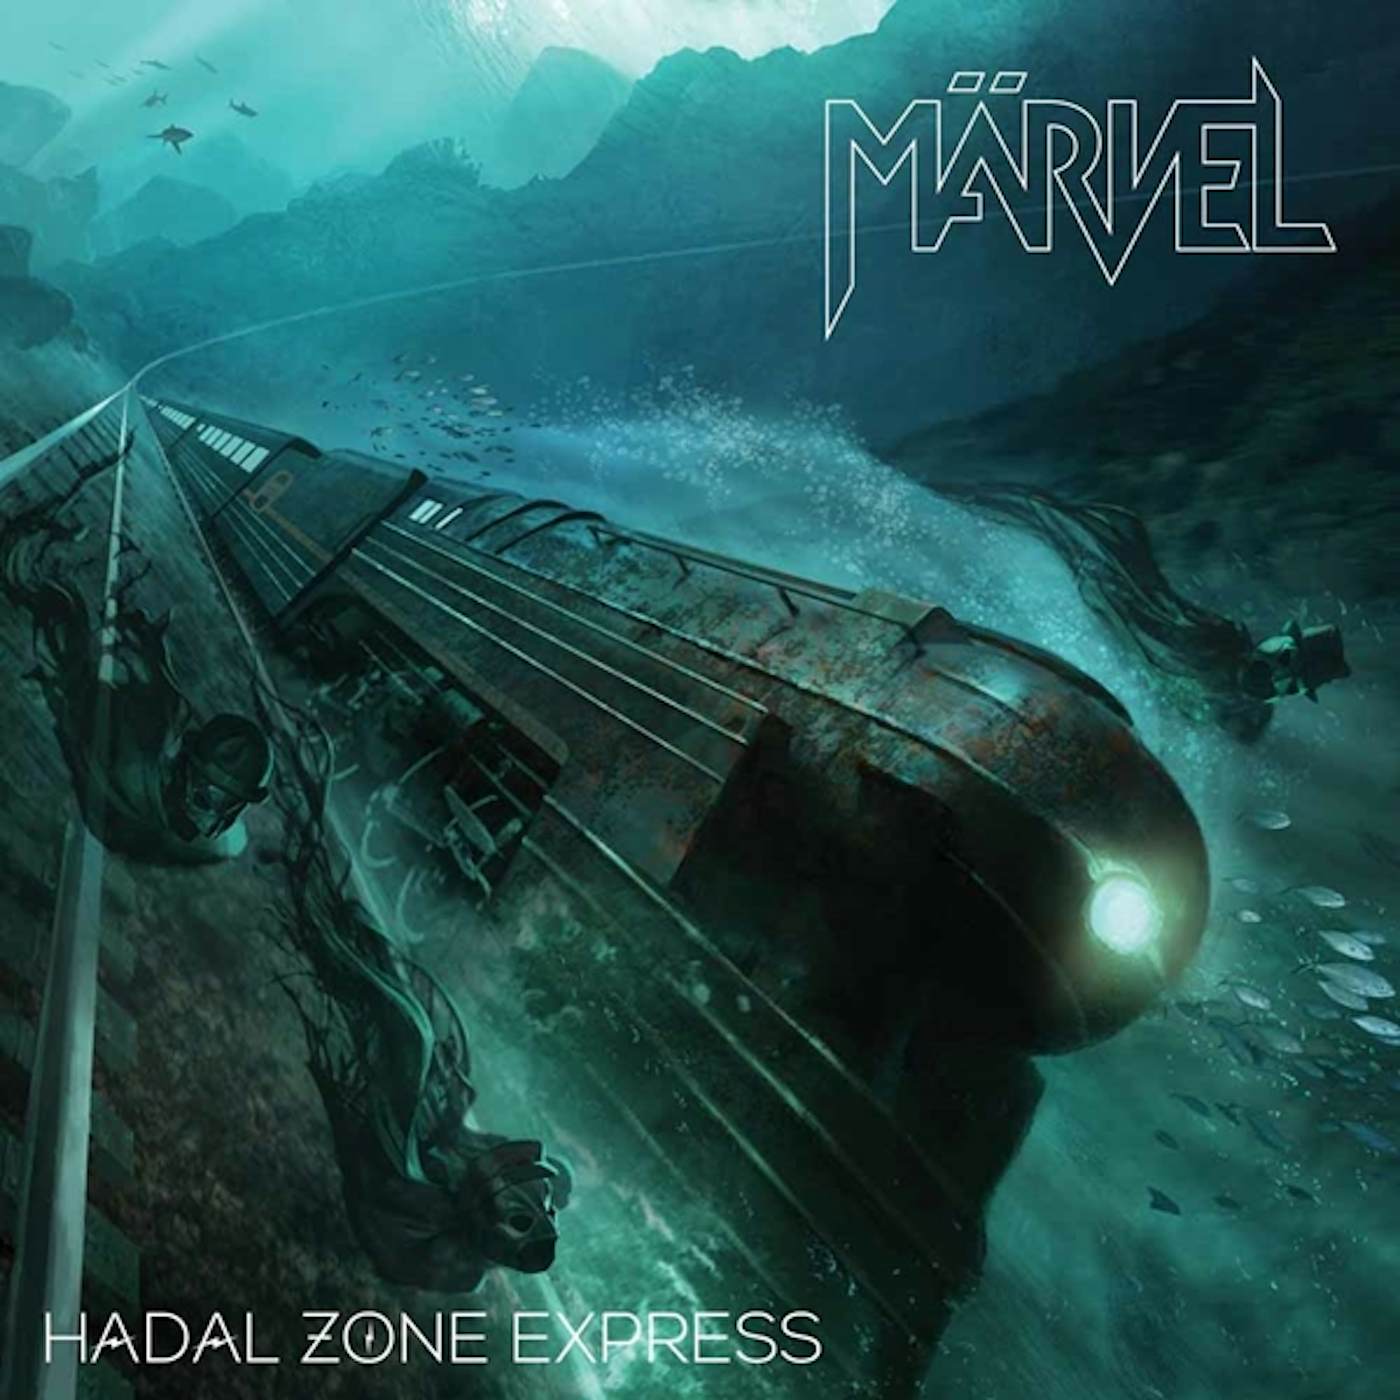 Marvel Hadal Zone Express Vinyl Record